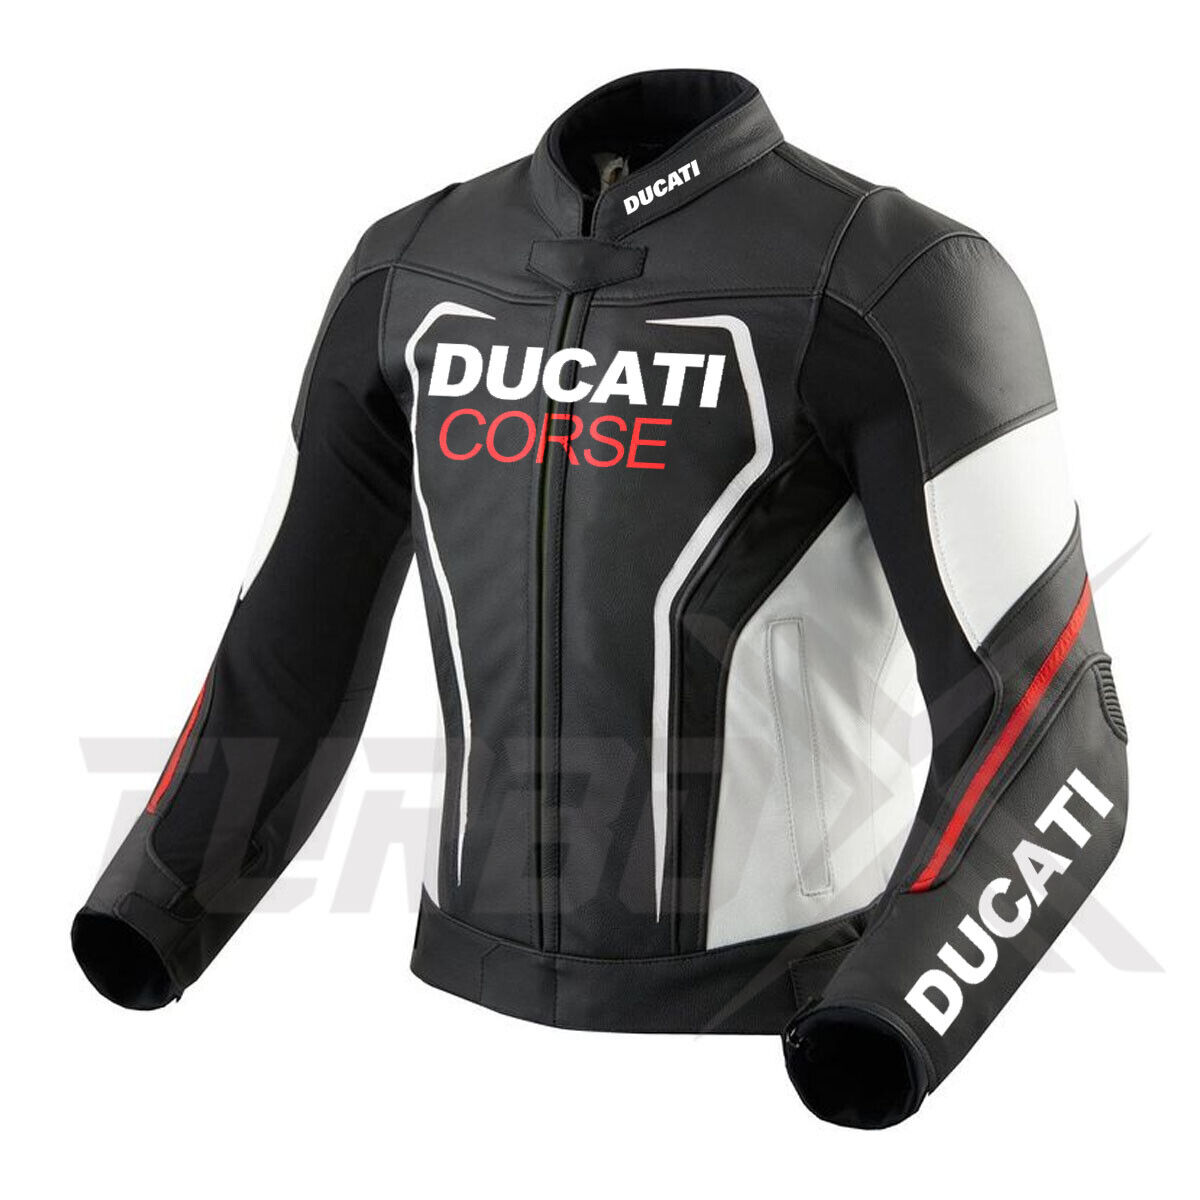 Ducati Leather Jacket